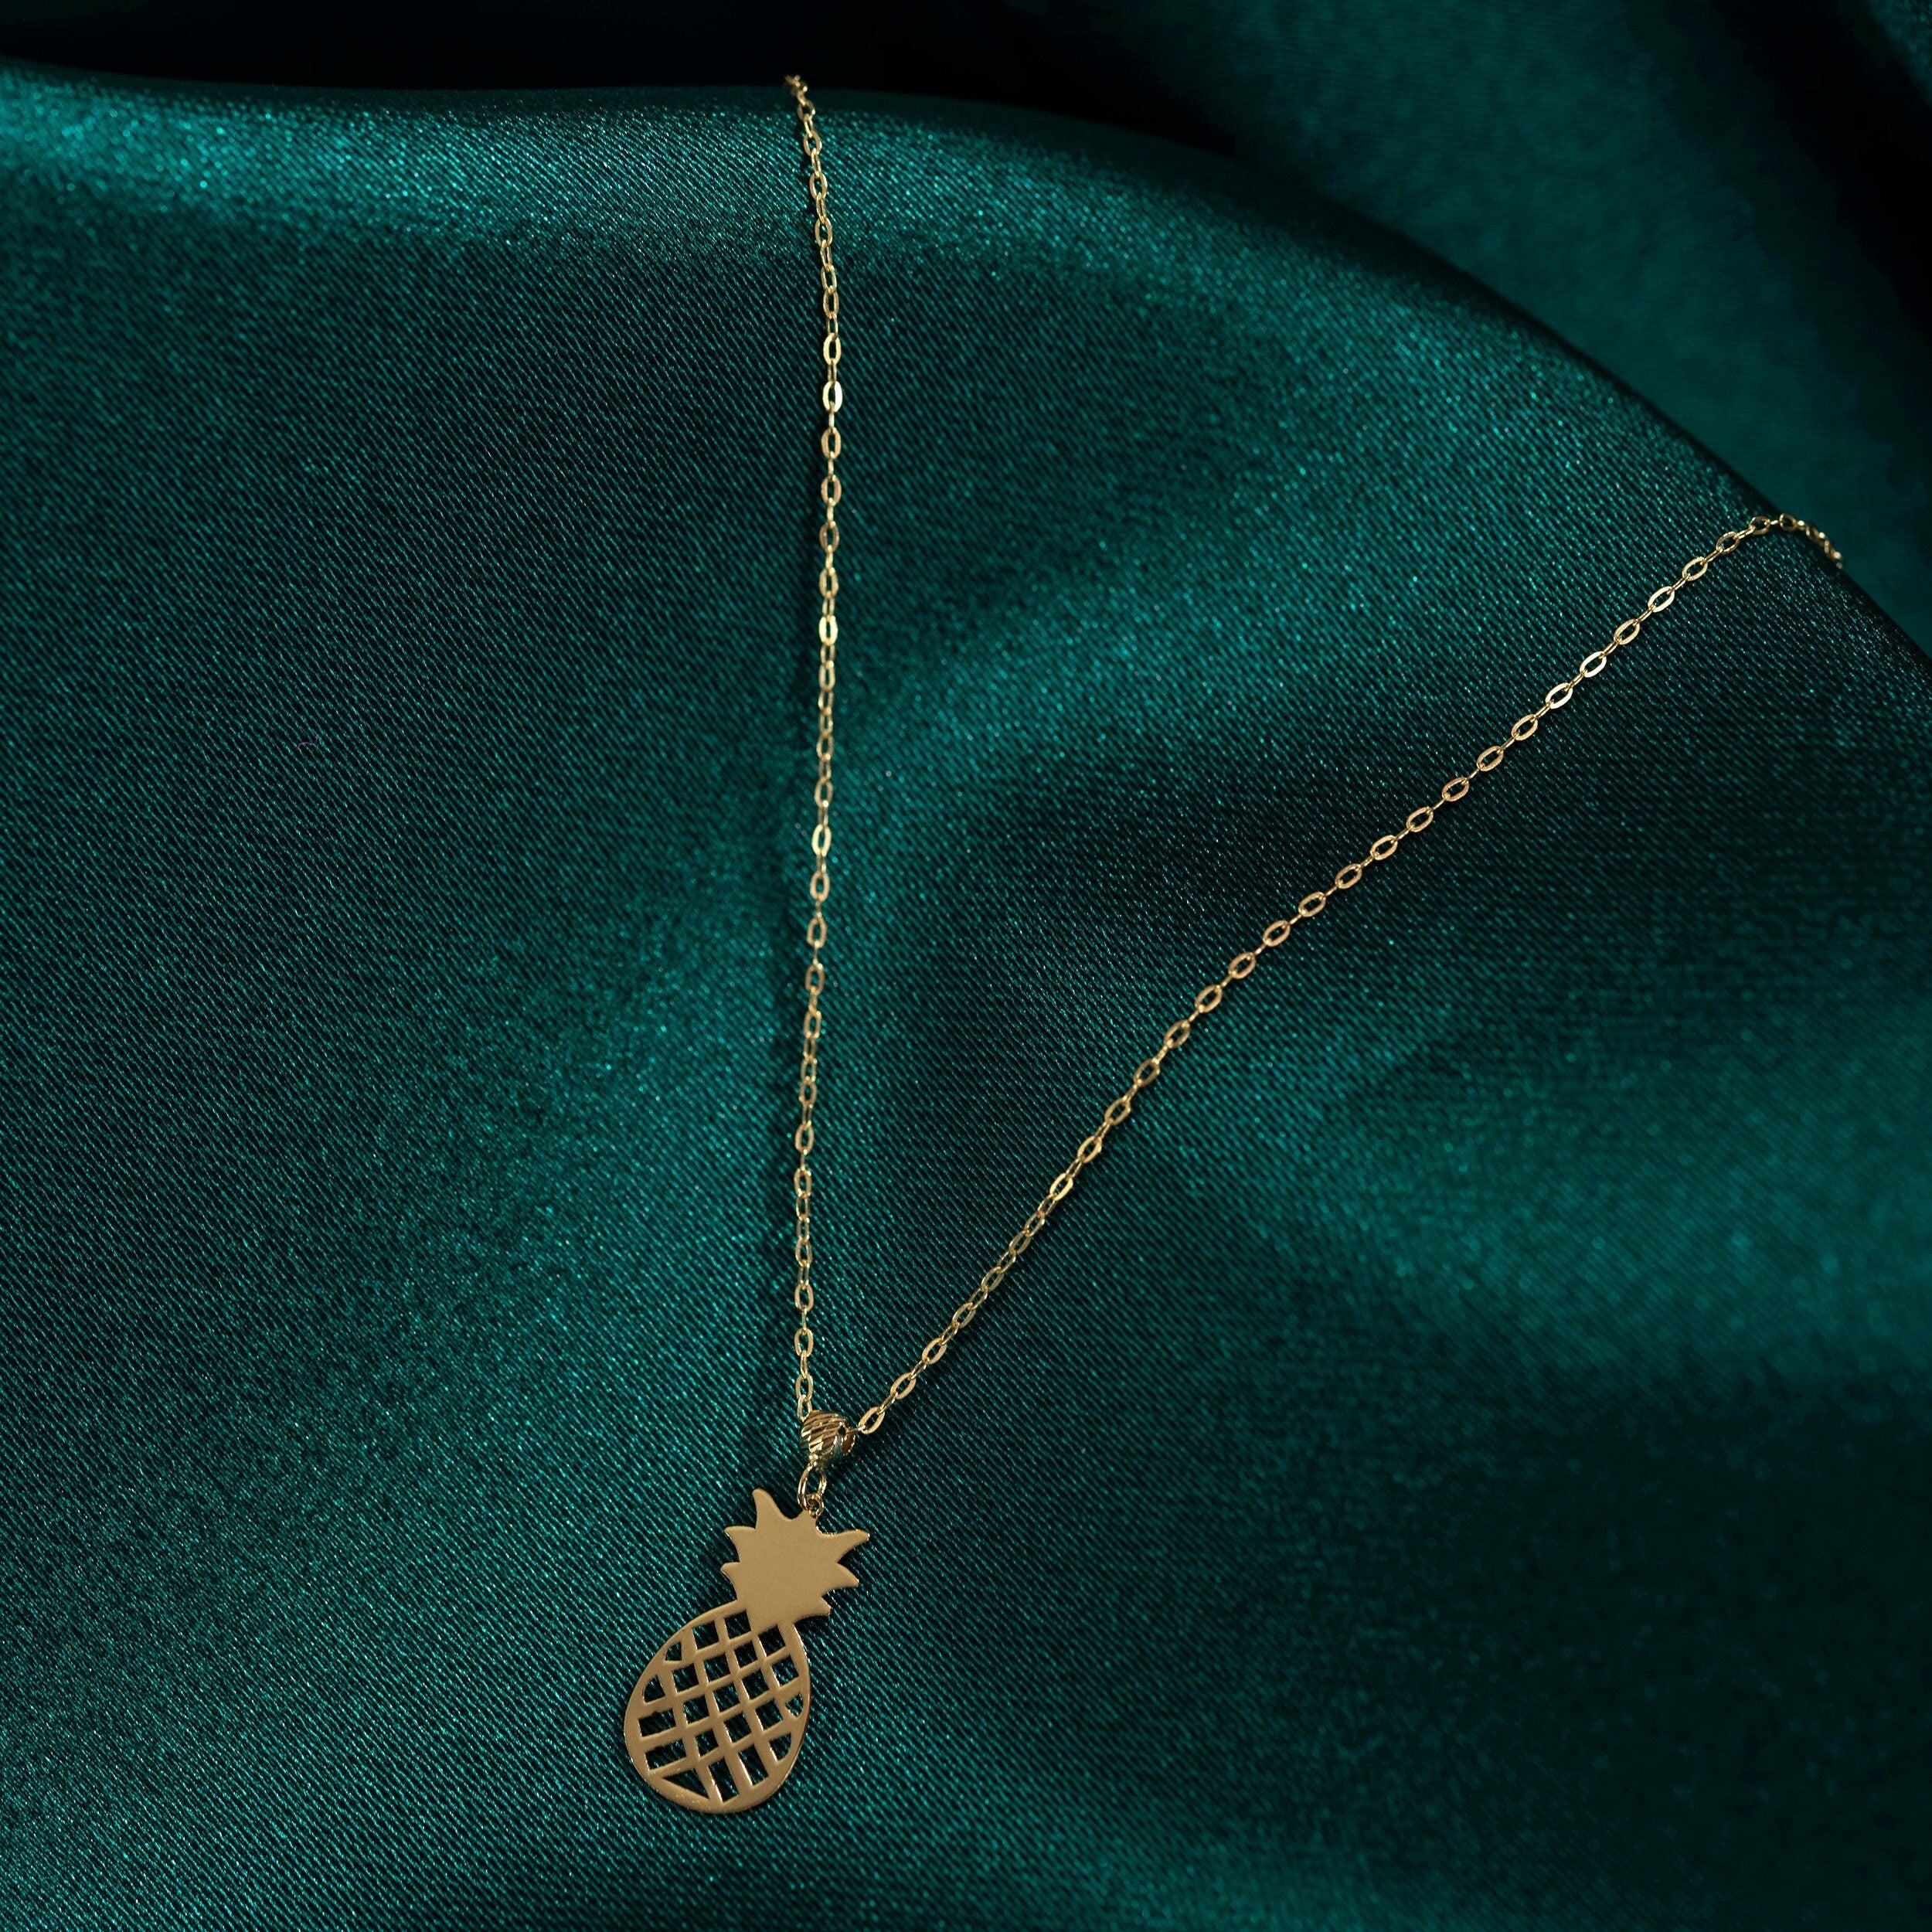 14 Carat Pineapple Necklace - anskol89